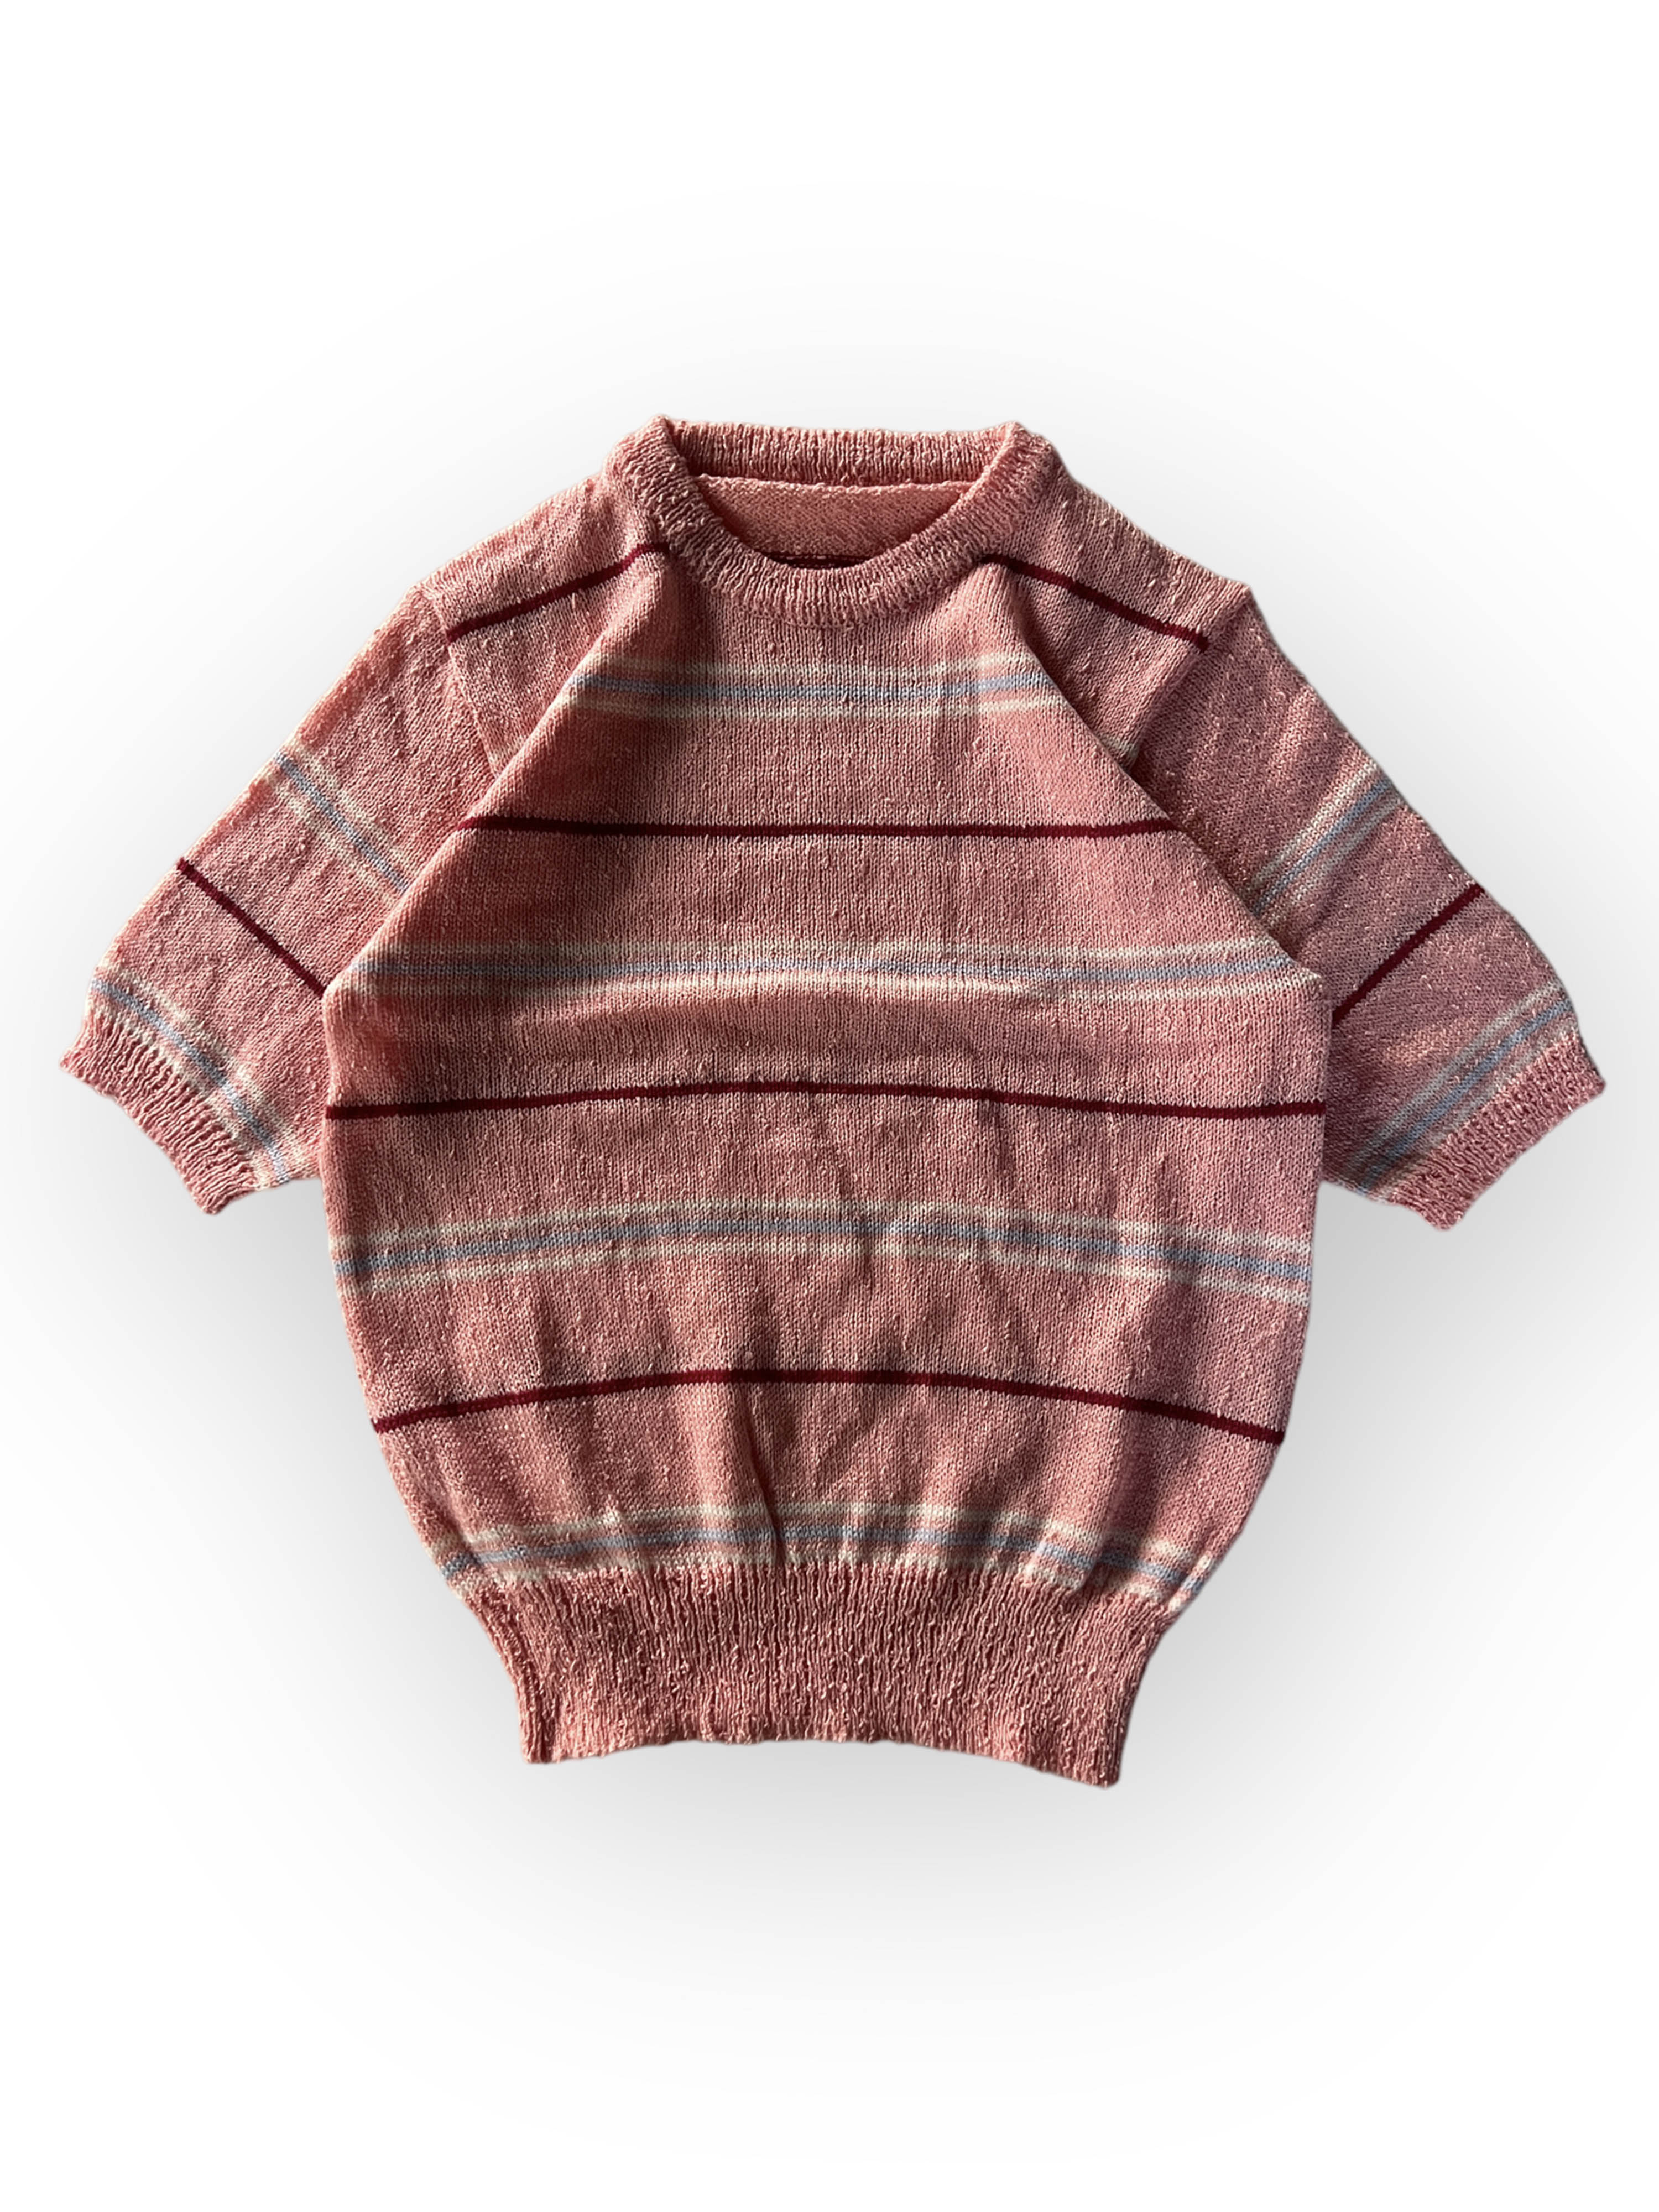 vintage pink knit top